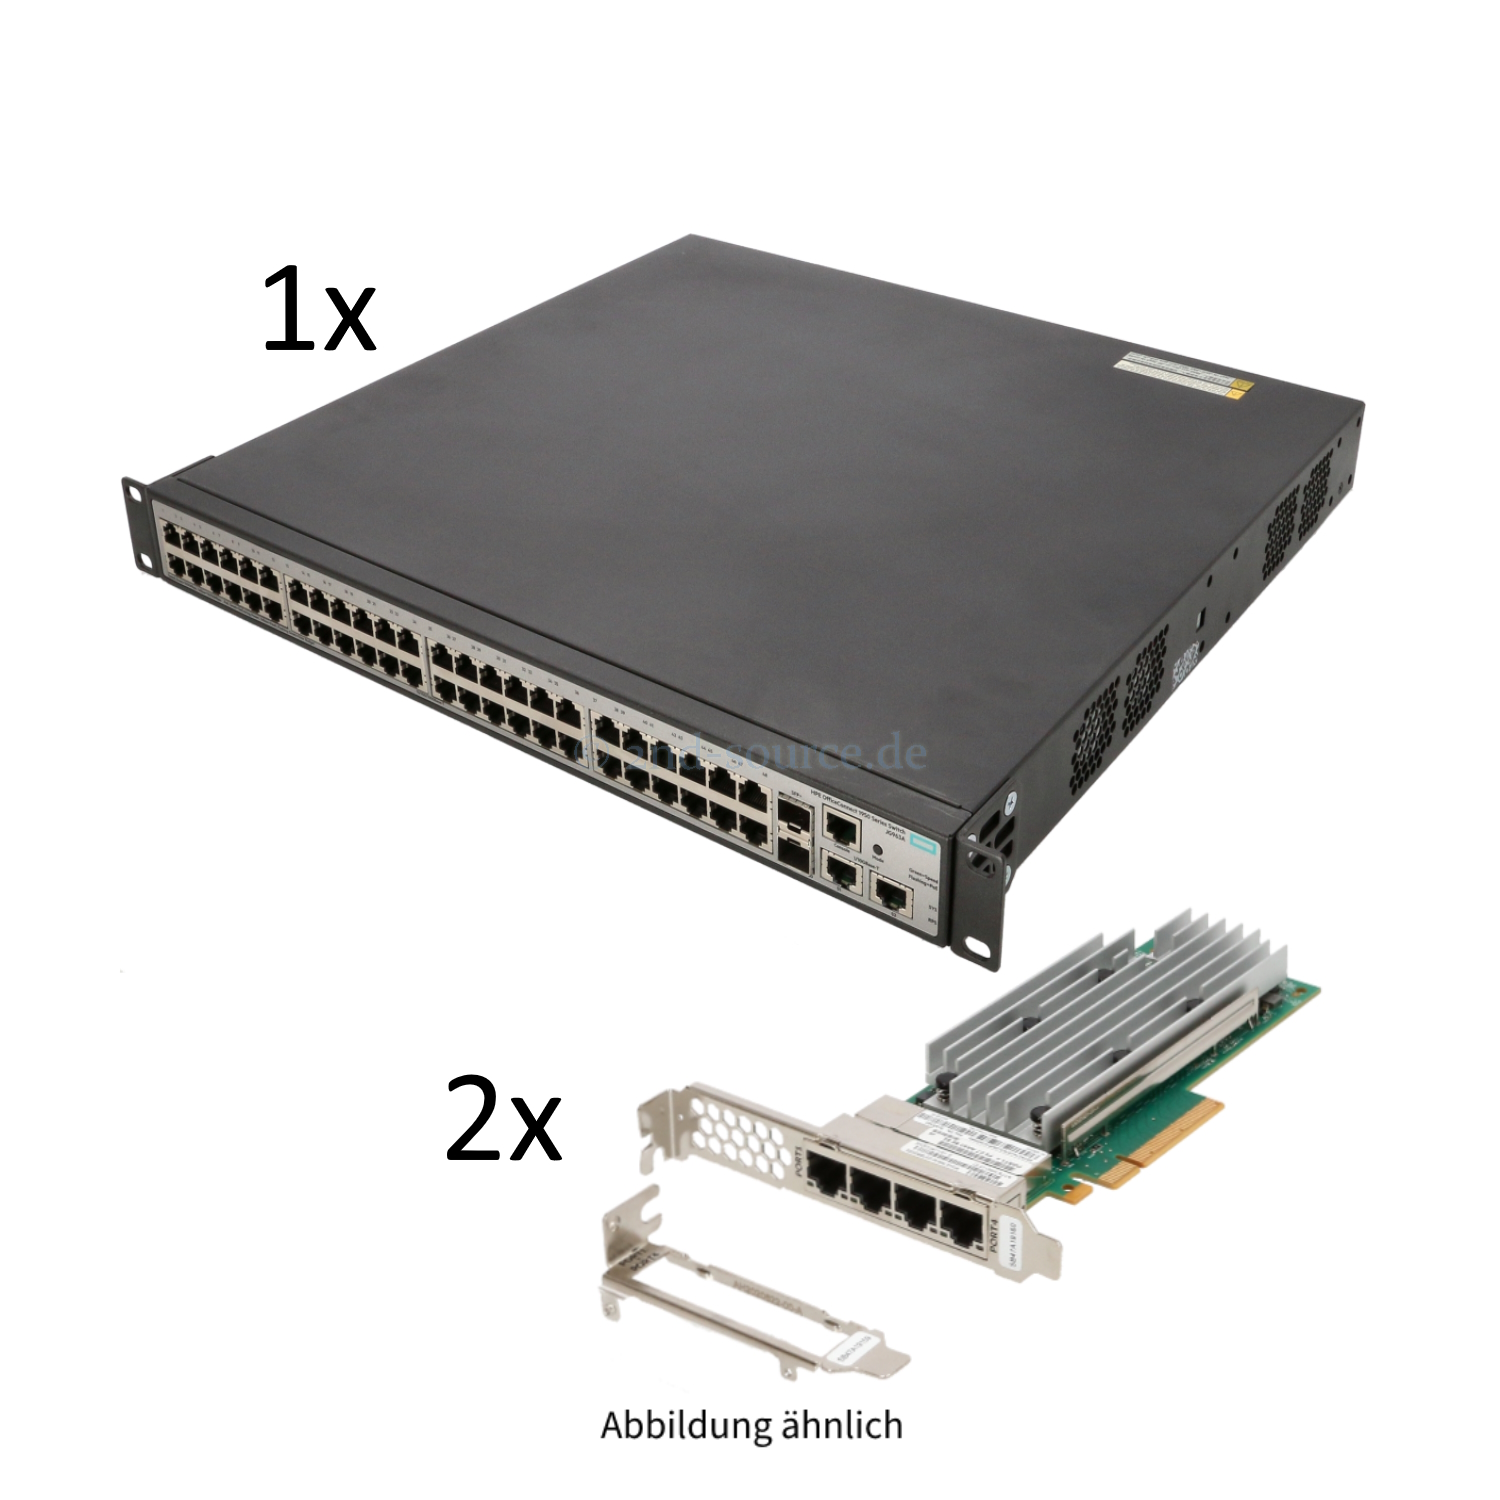 Starterkit "M" 1x HPE OfficeConnect 1950-48G-2SFP+ 48x 1000Base-T 2x 10GBase-T 2x SFP+ und 2x QLogic QL41134 4x 10GBase-T PCIe Server Ethernet Adapter